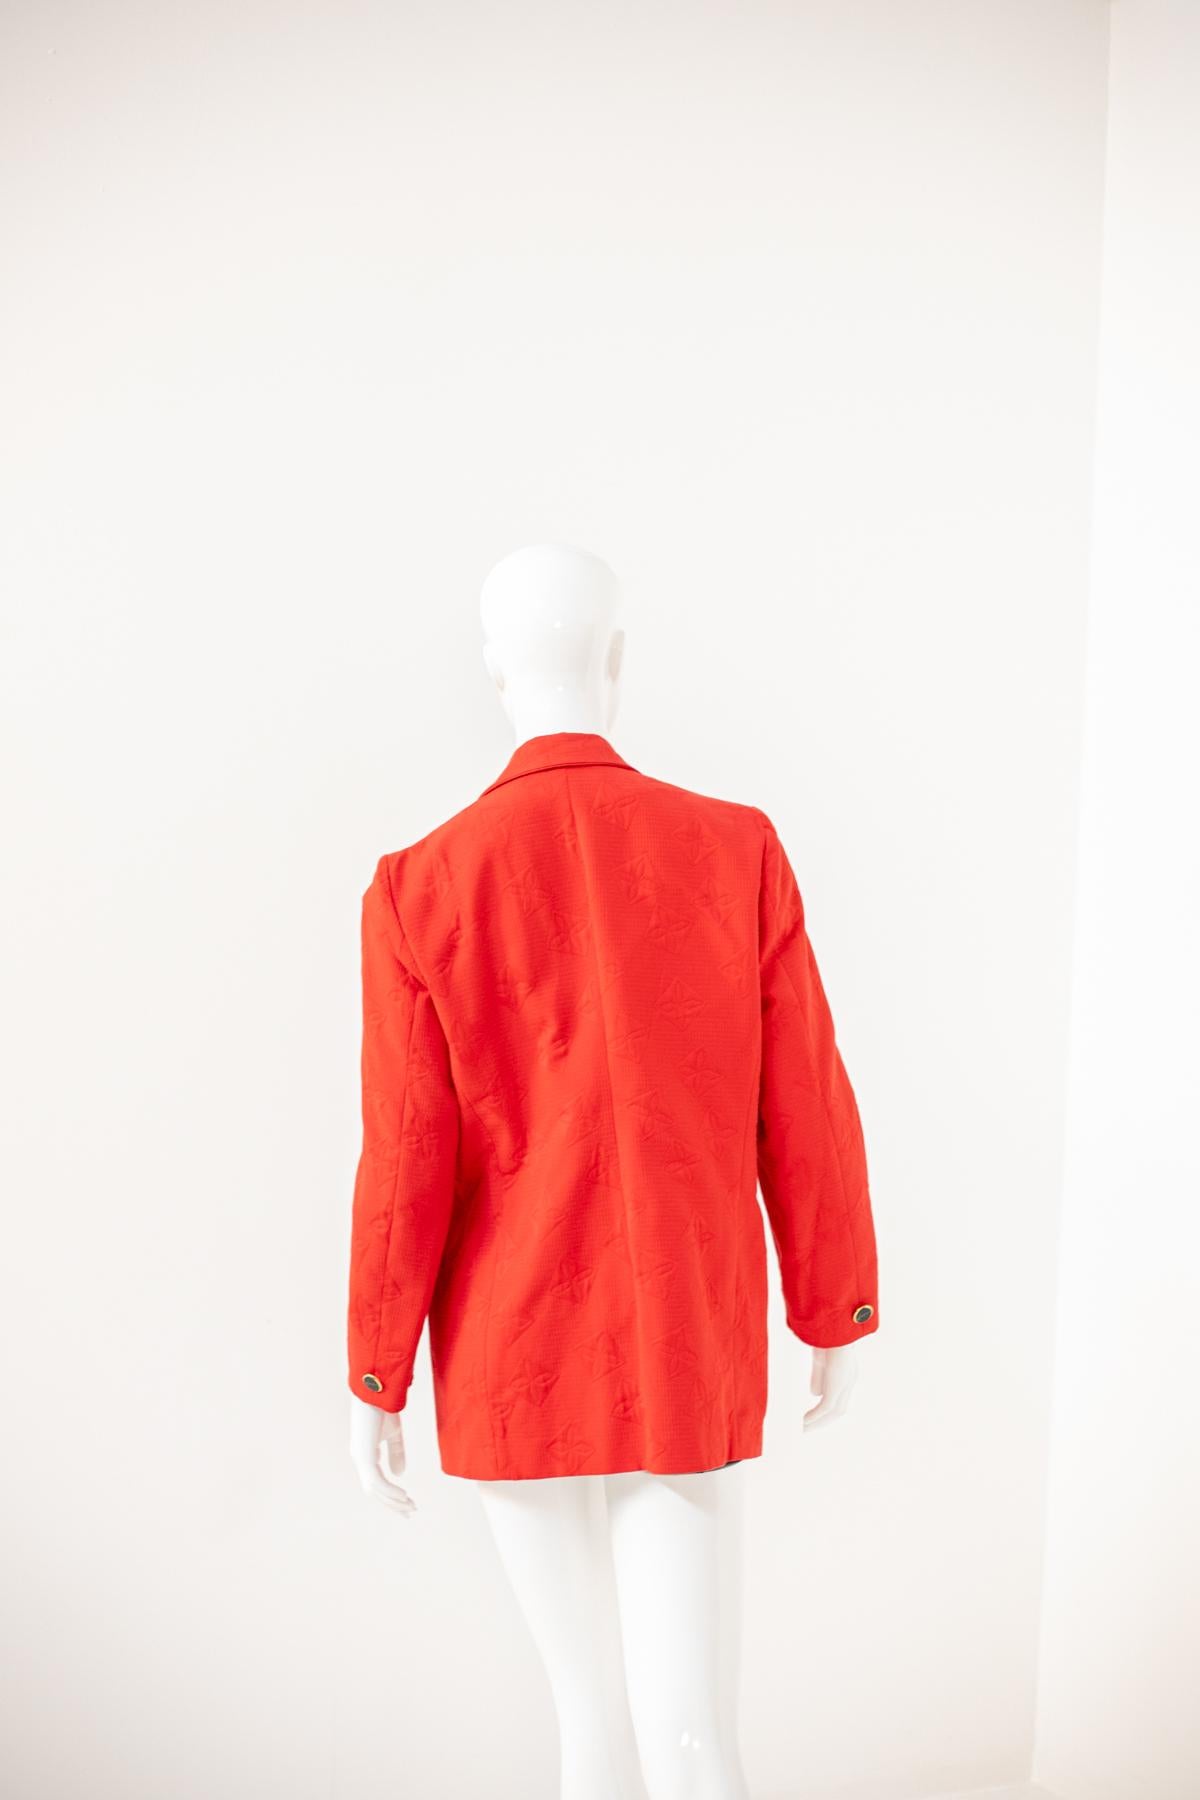 Chic Vintage Sparkly Red Blazer For Sale 4